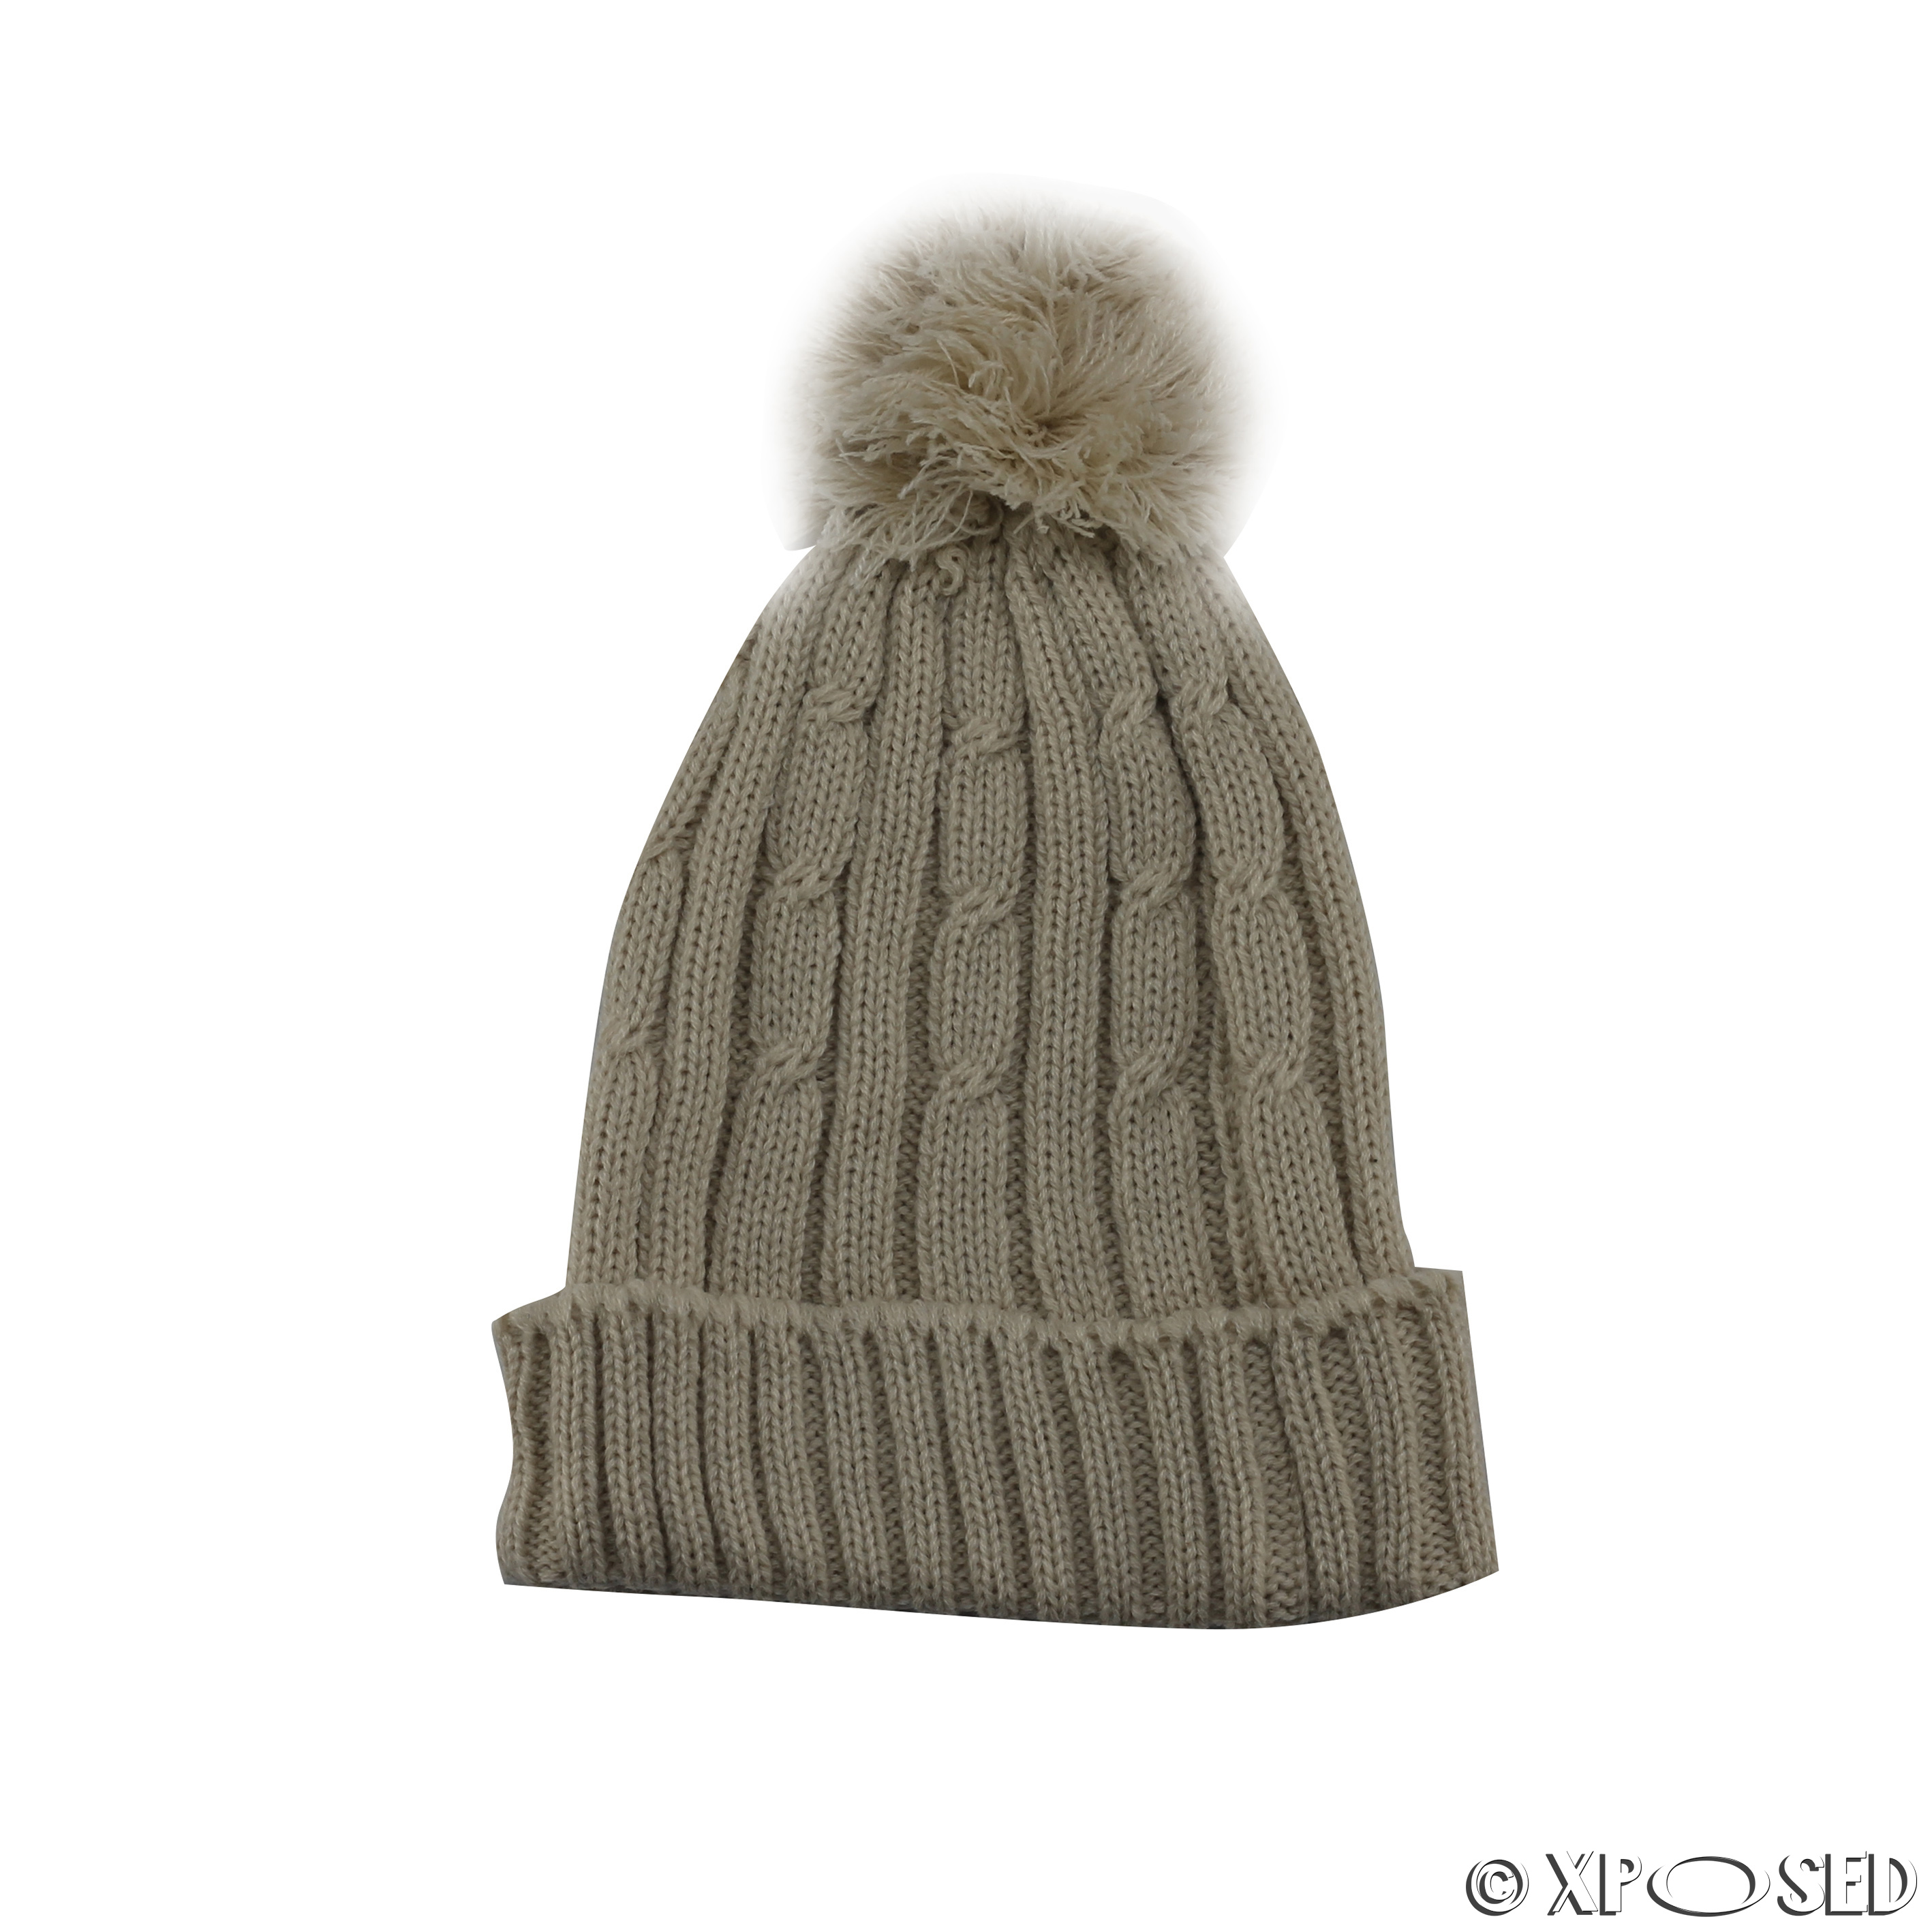 Unisex Mens Ladies Warm Winter Knitted Beanie Faux Raccoon Fur Bobble Hat Cap